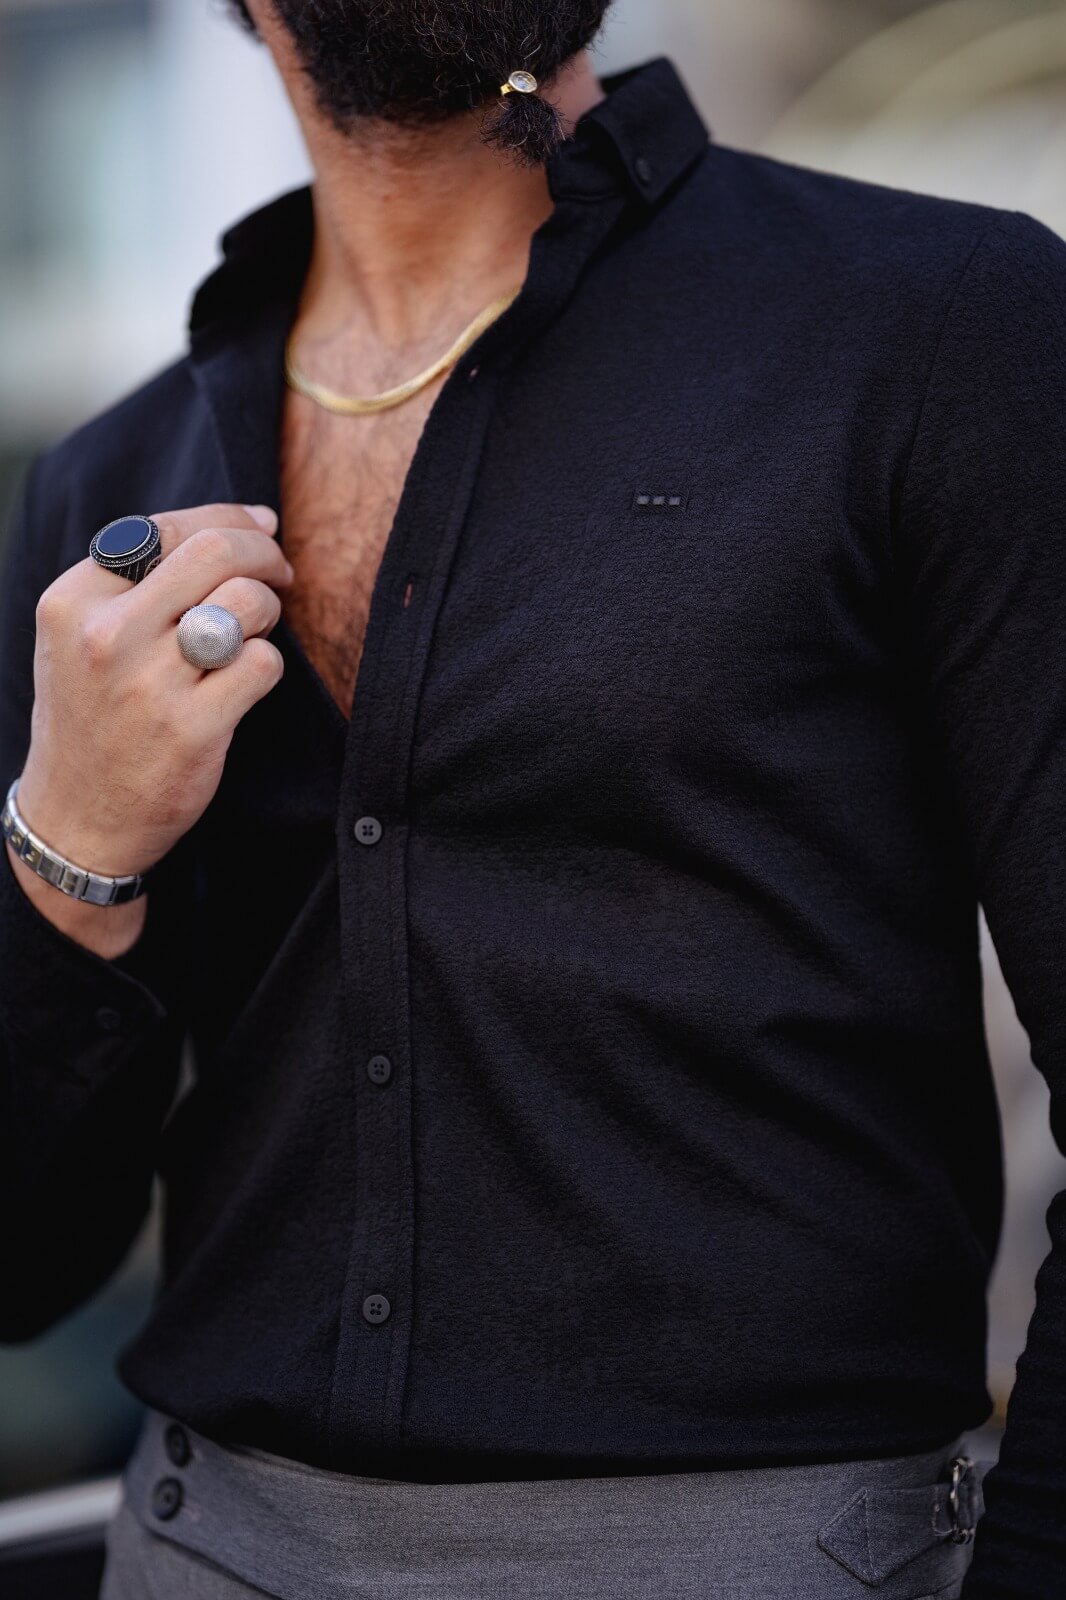 A Black Long Sleeve Shirt on display.